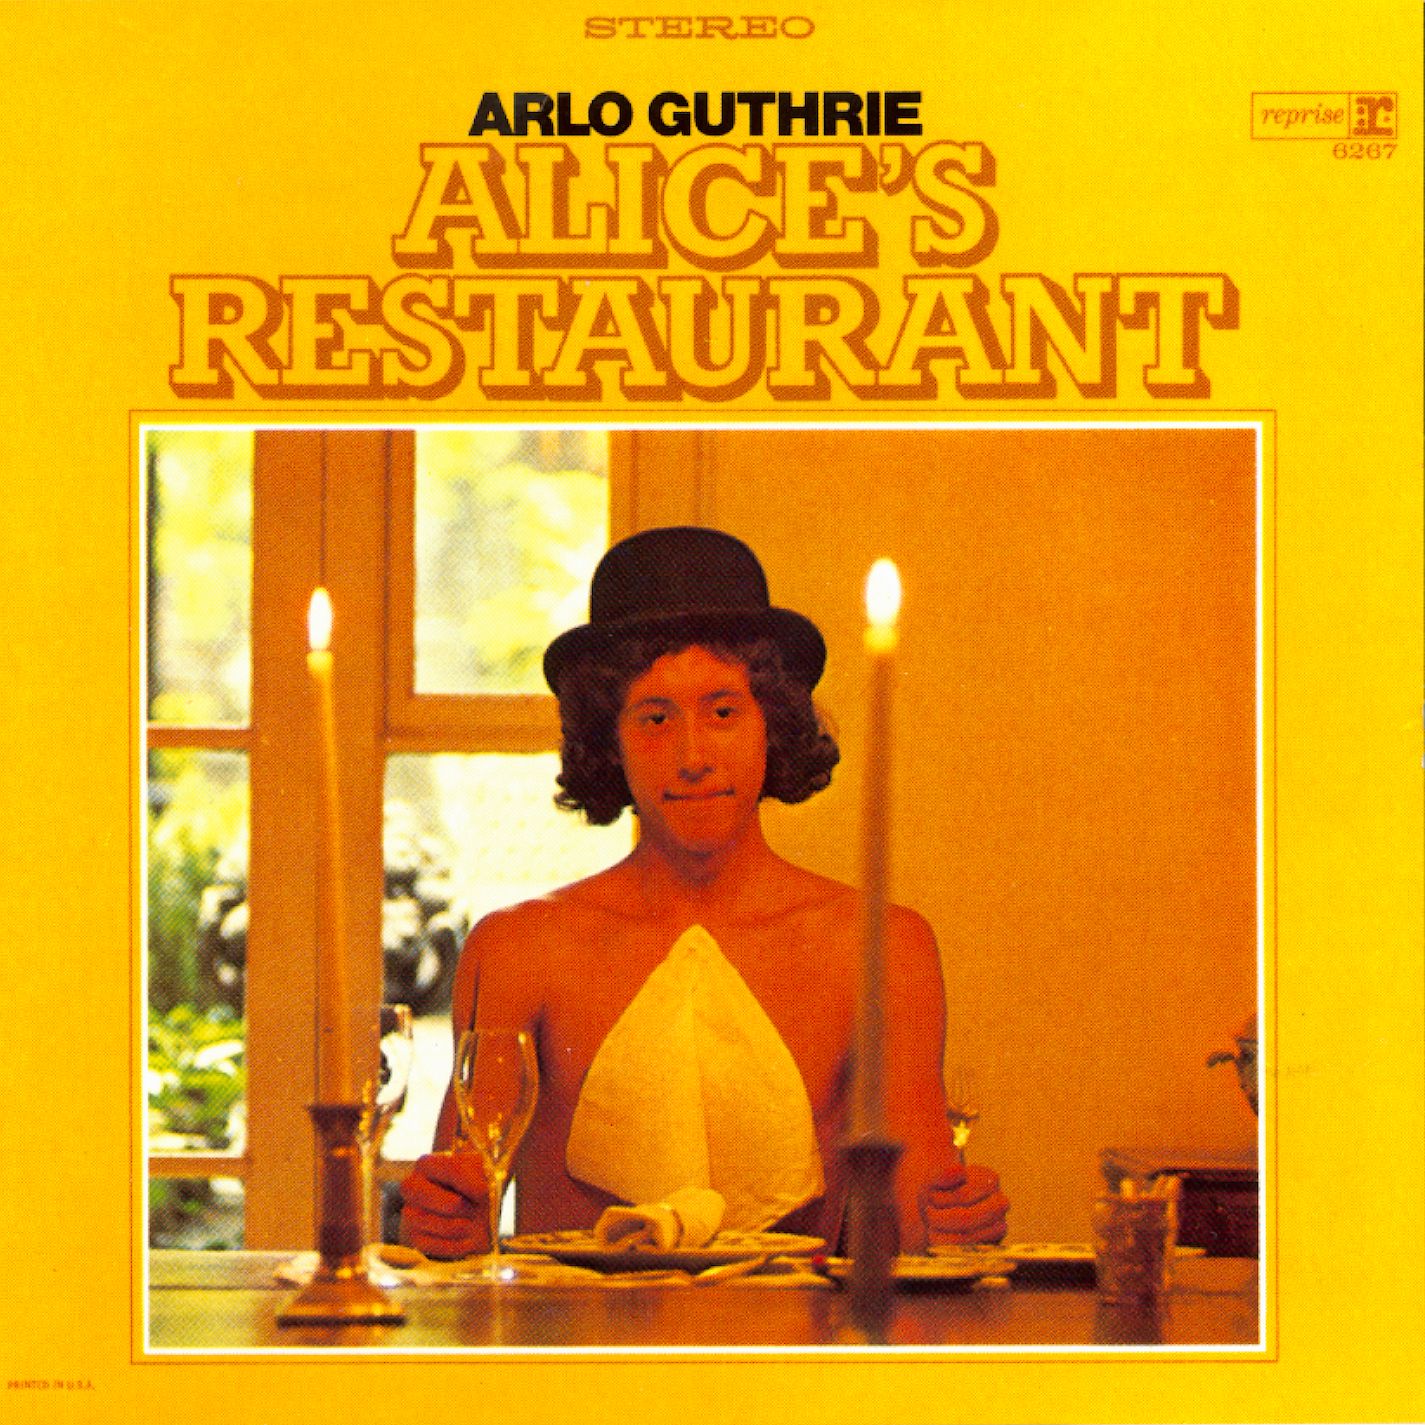 Arlo Guthrie, “Alice’s Restaurant”